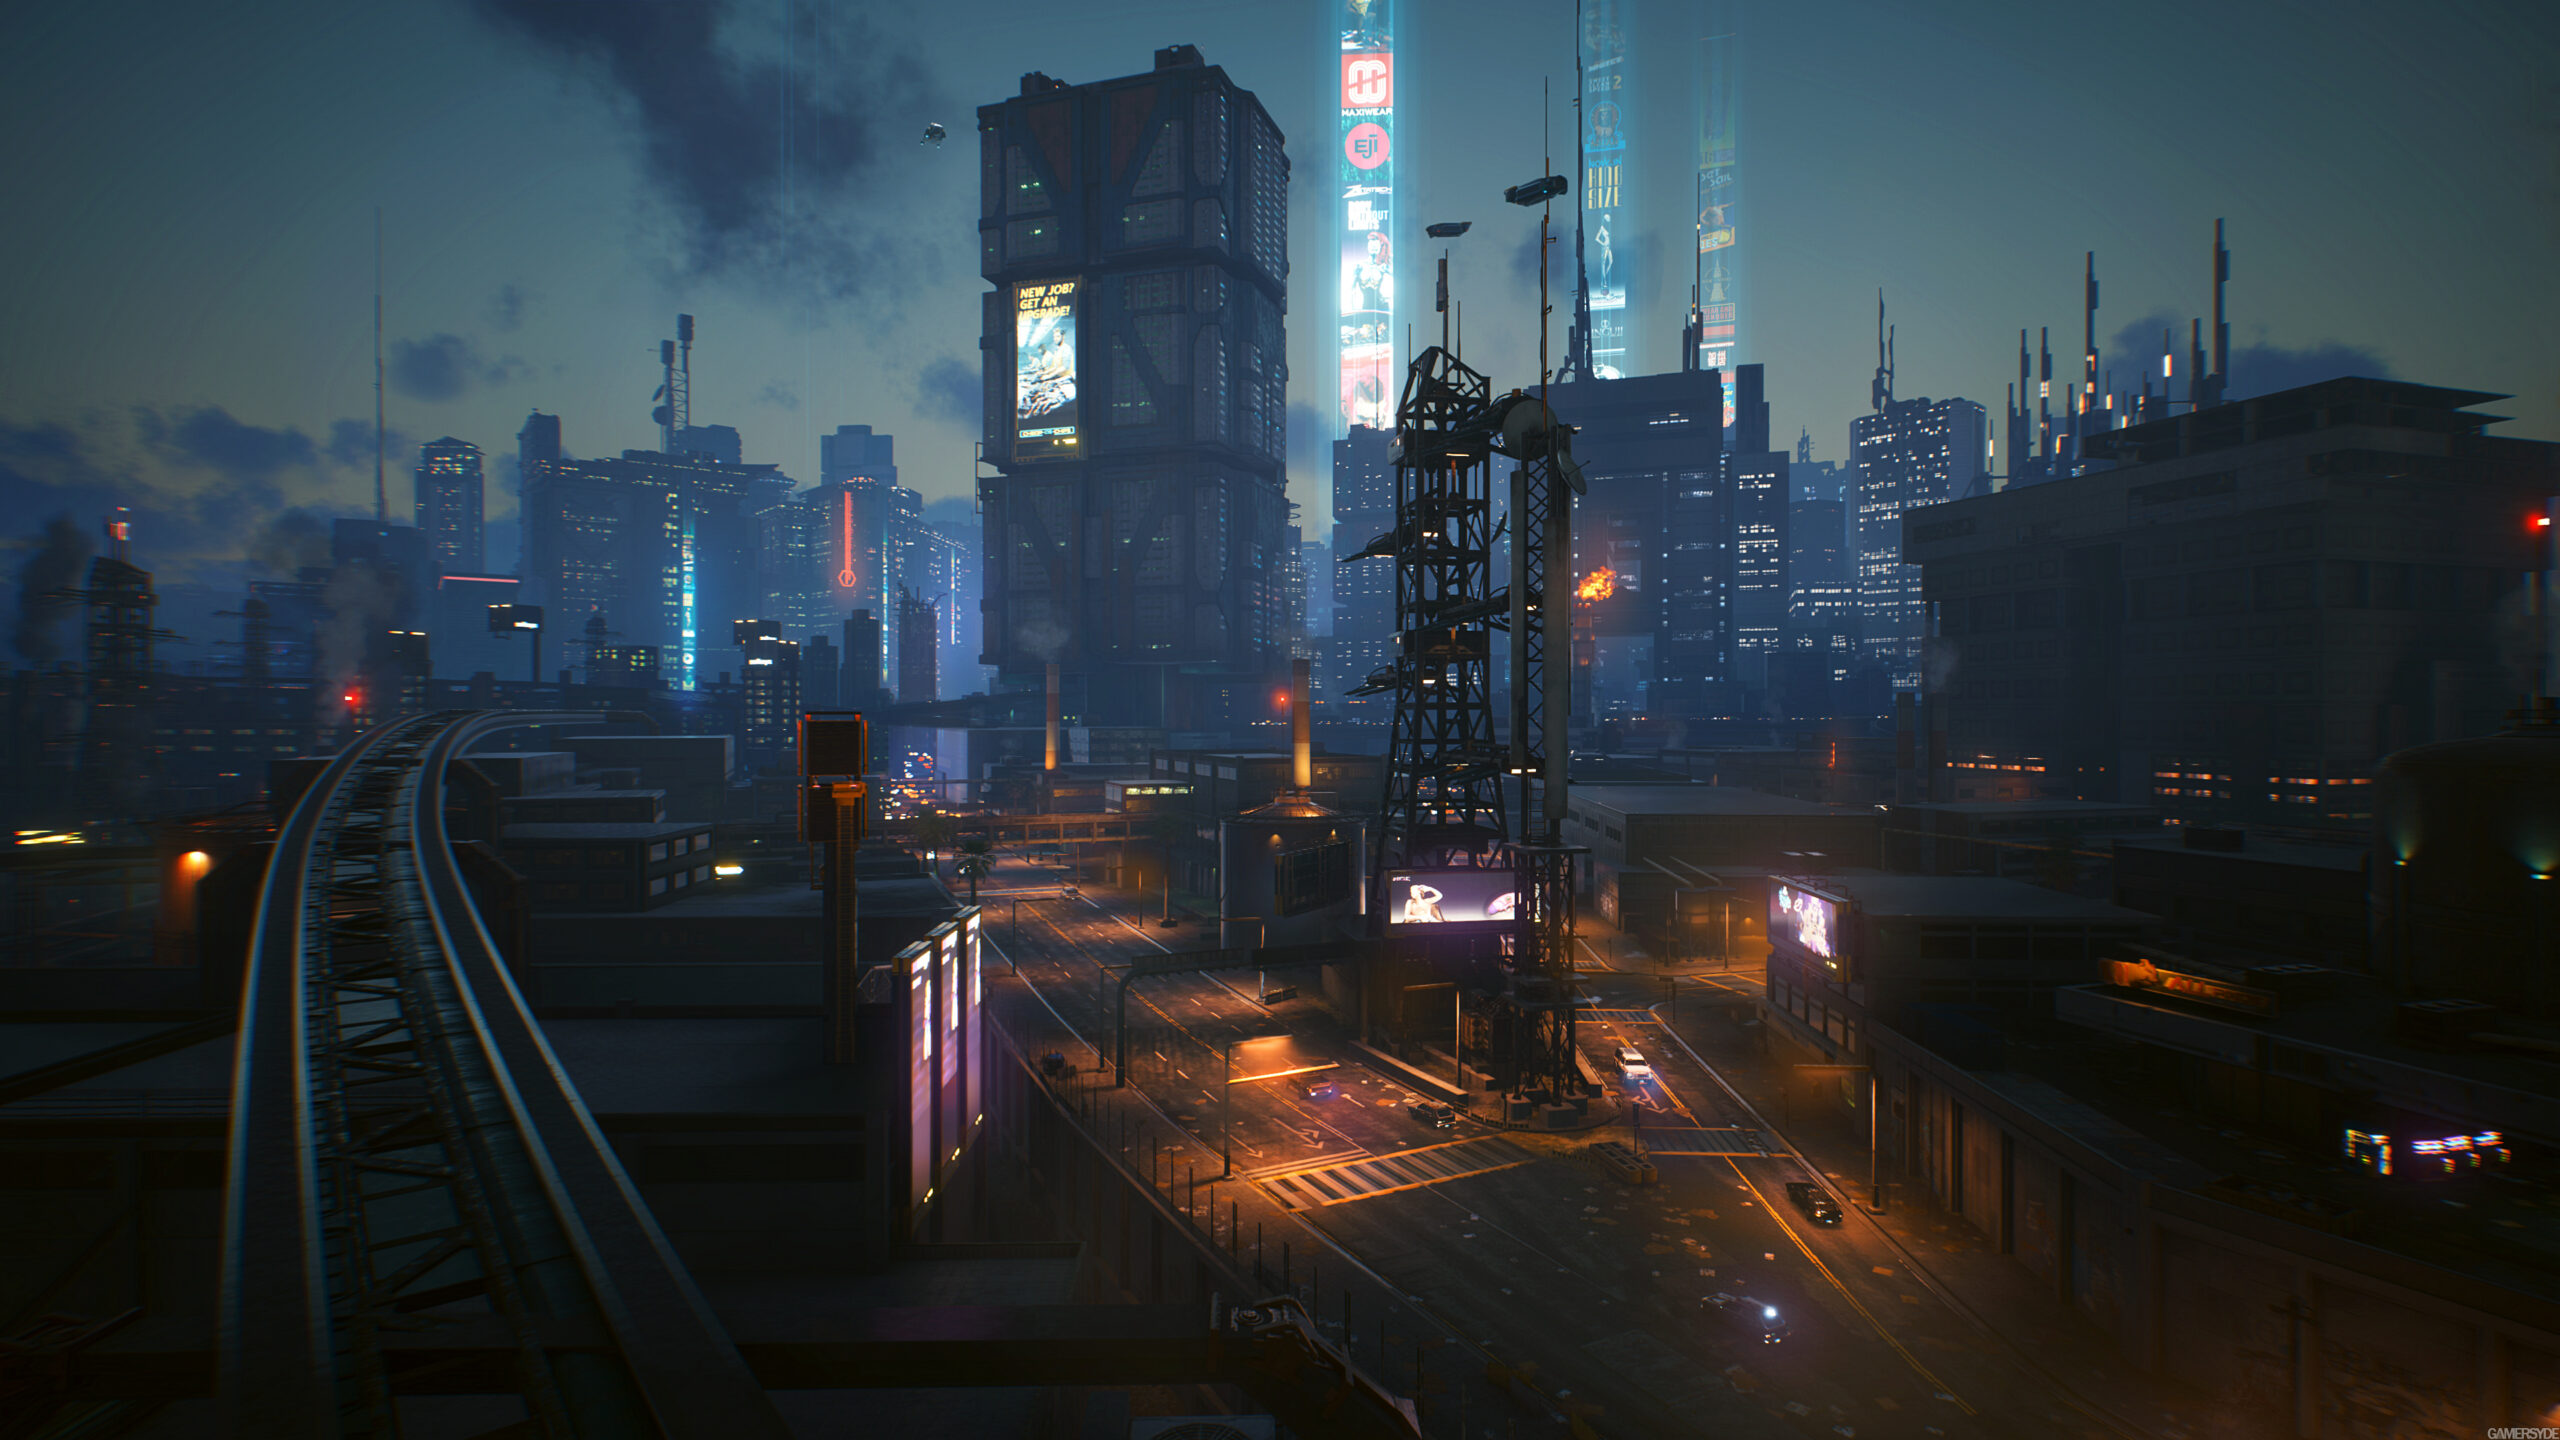 Cyberpunk 2077 4k Screenshots Show A Night City Full Of Life 9031